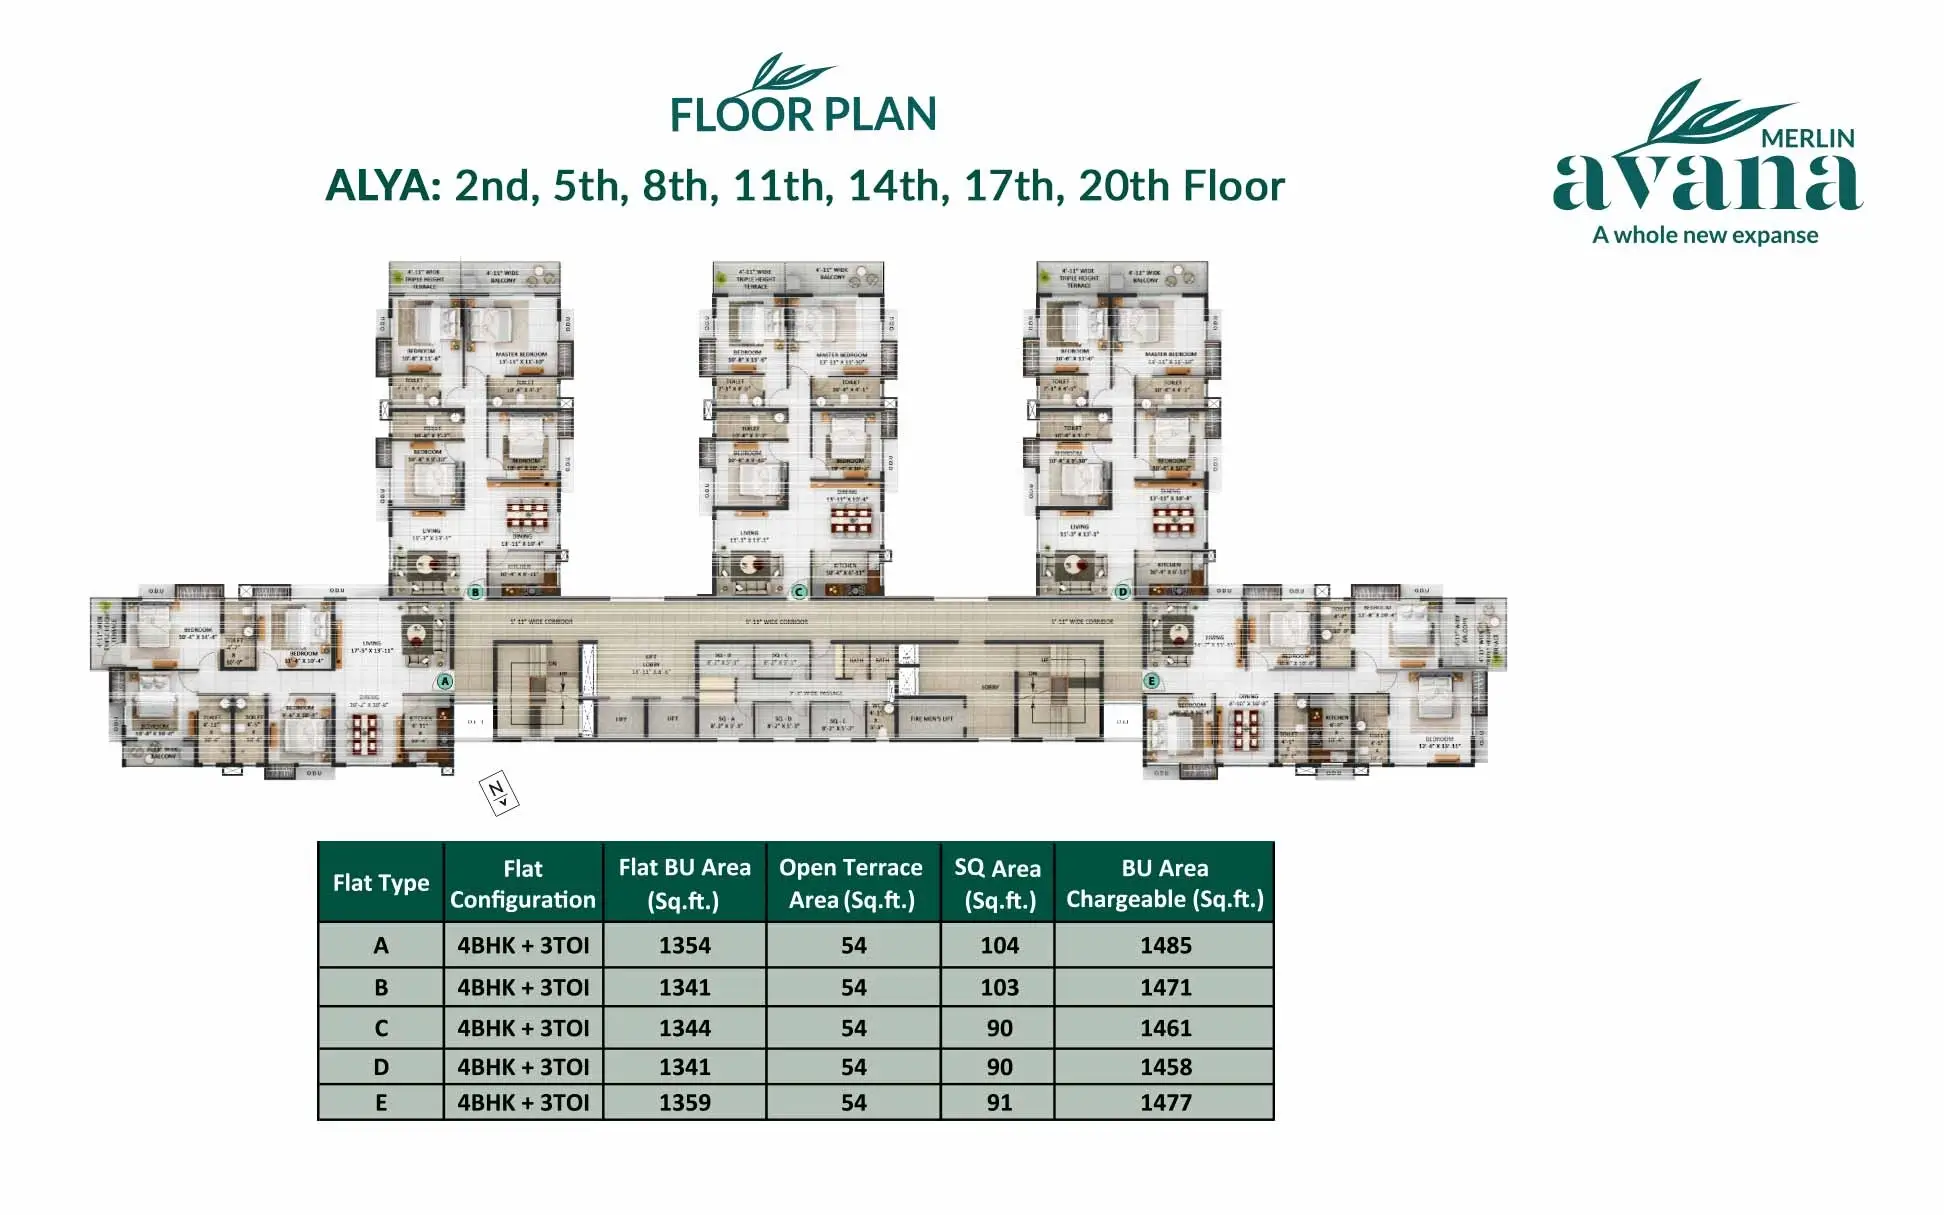 Merlin Avana Floor Plan 1